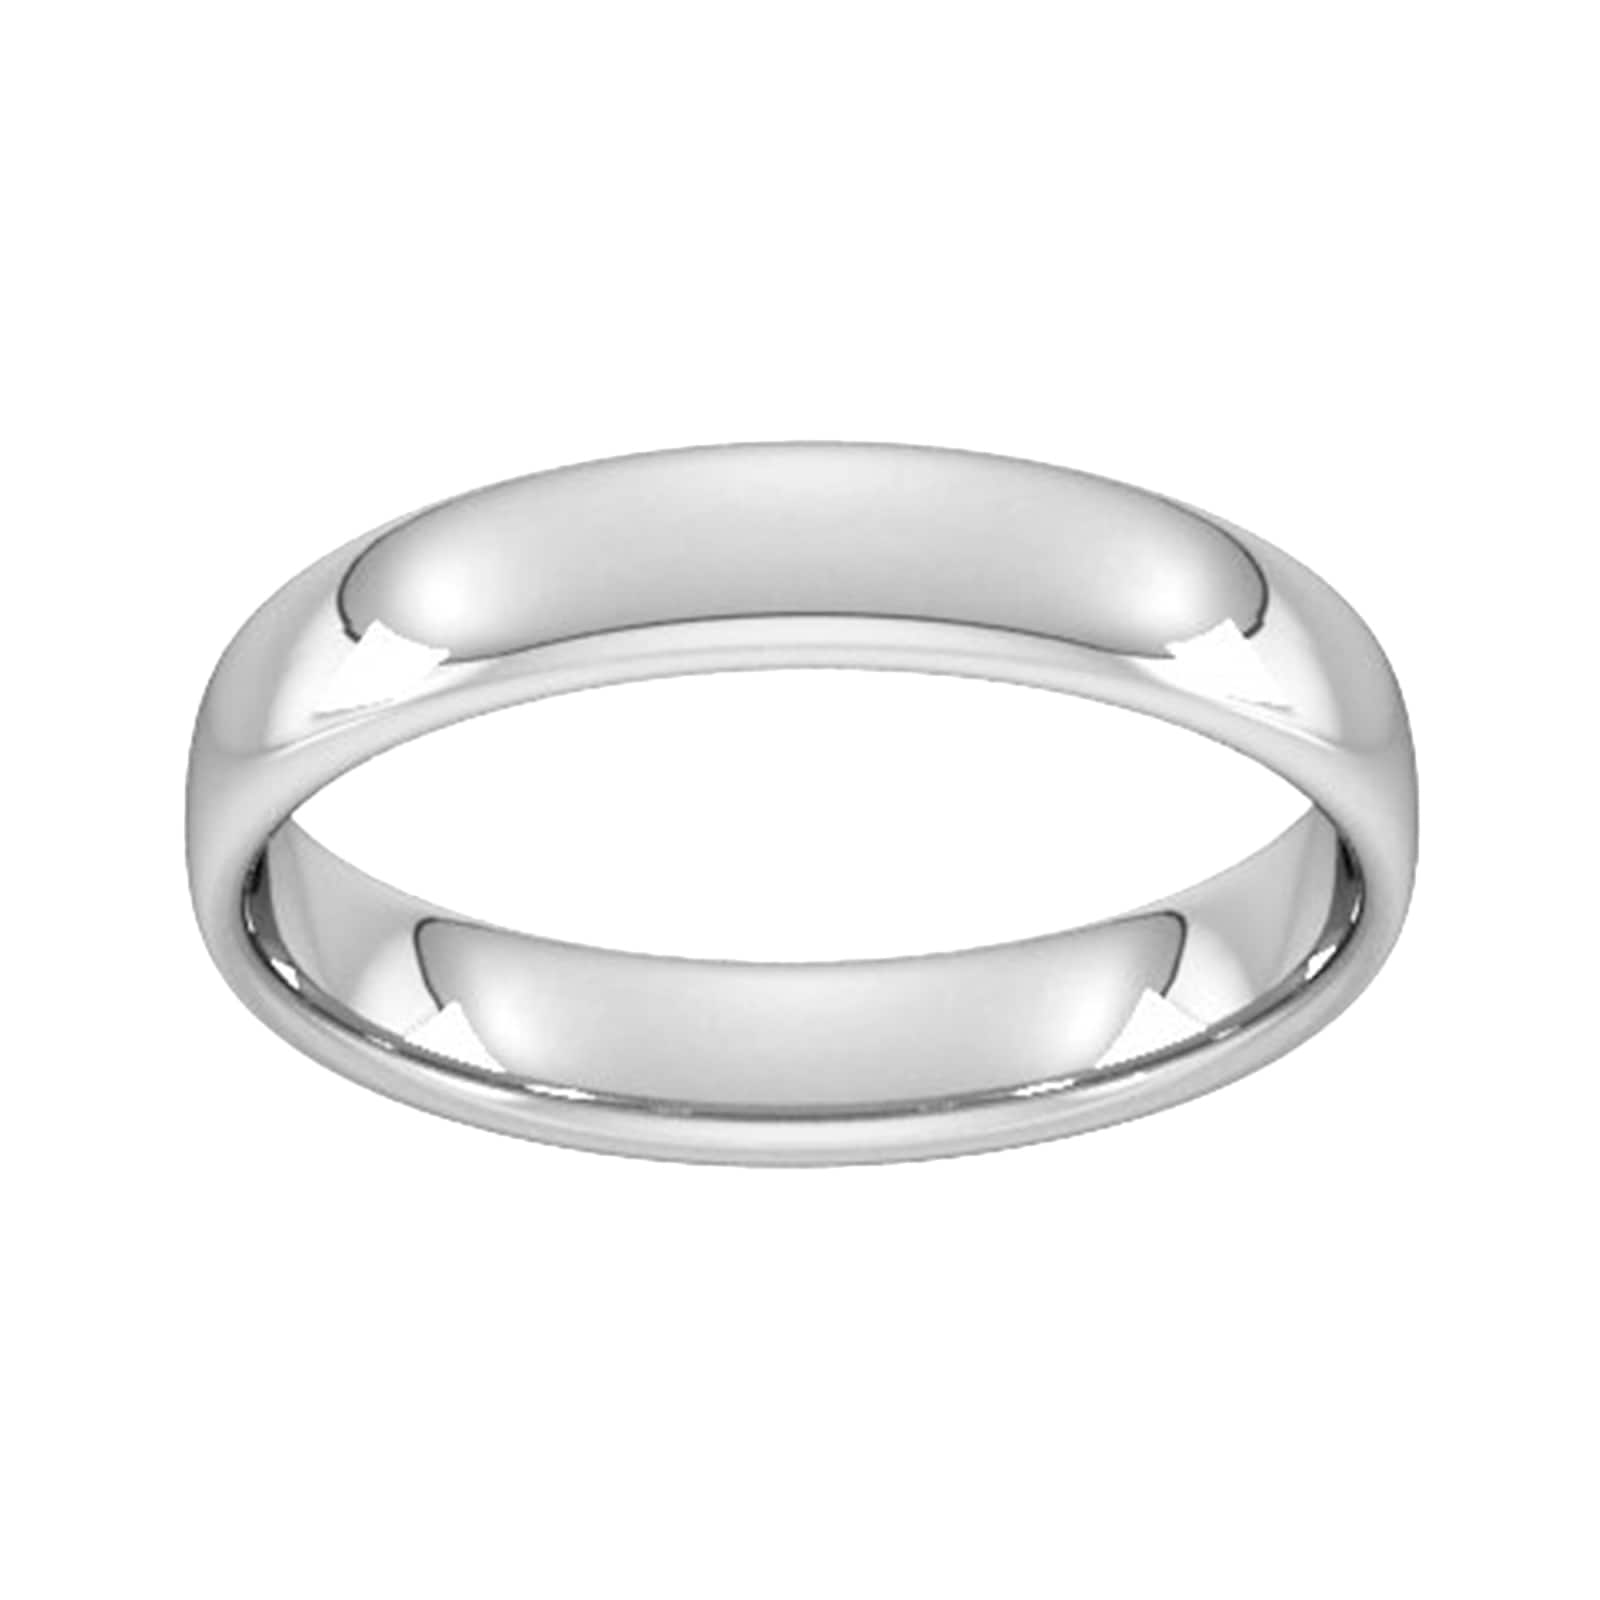 4mm Slight Court Standard Wedding Ring In Sterling Silver - Ring Size U